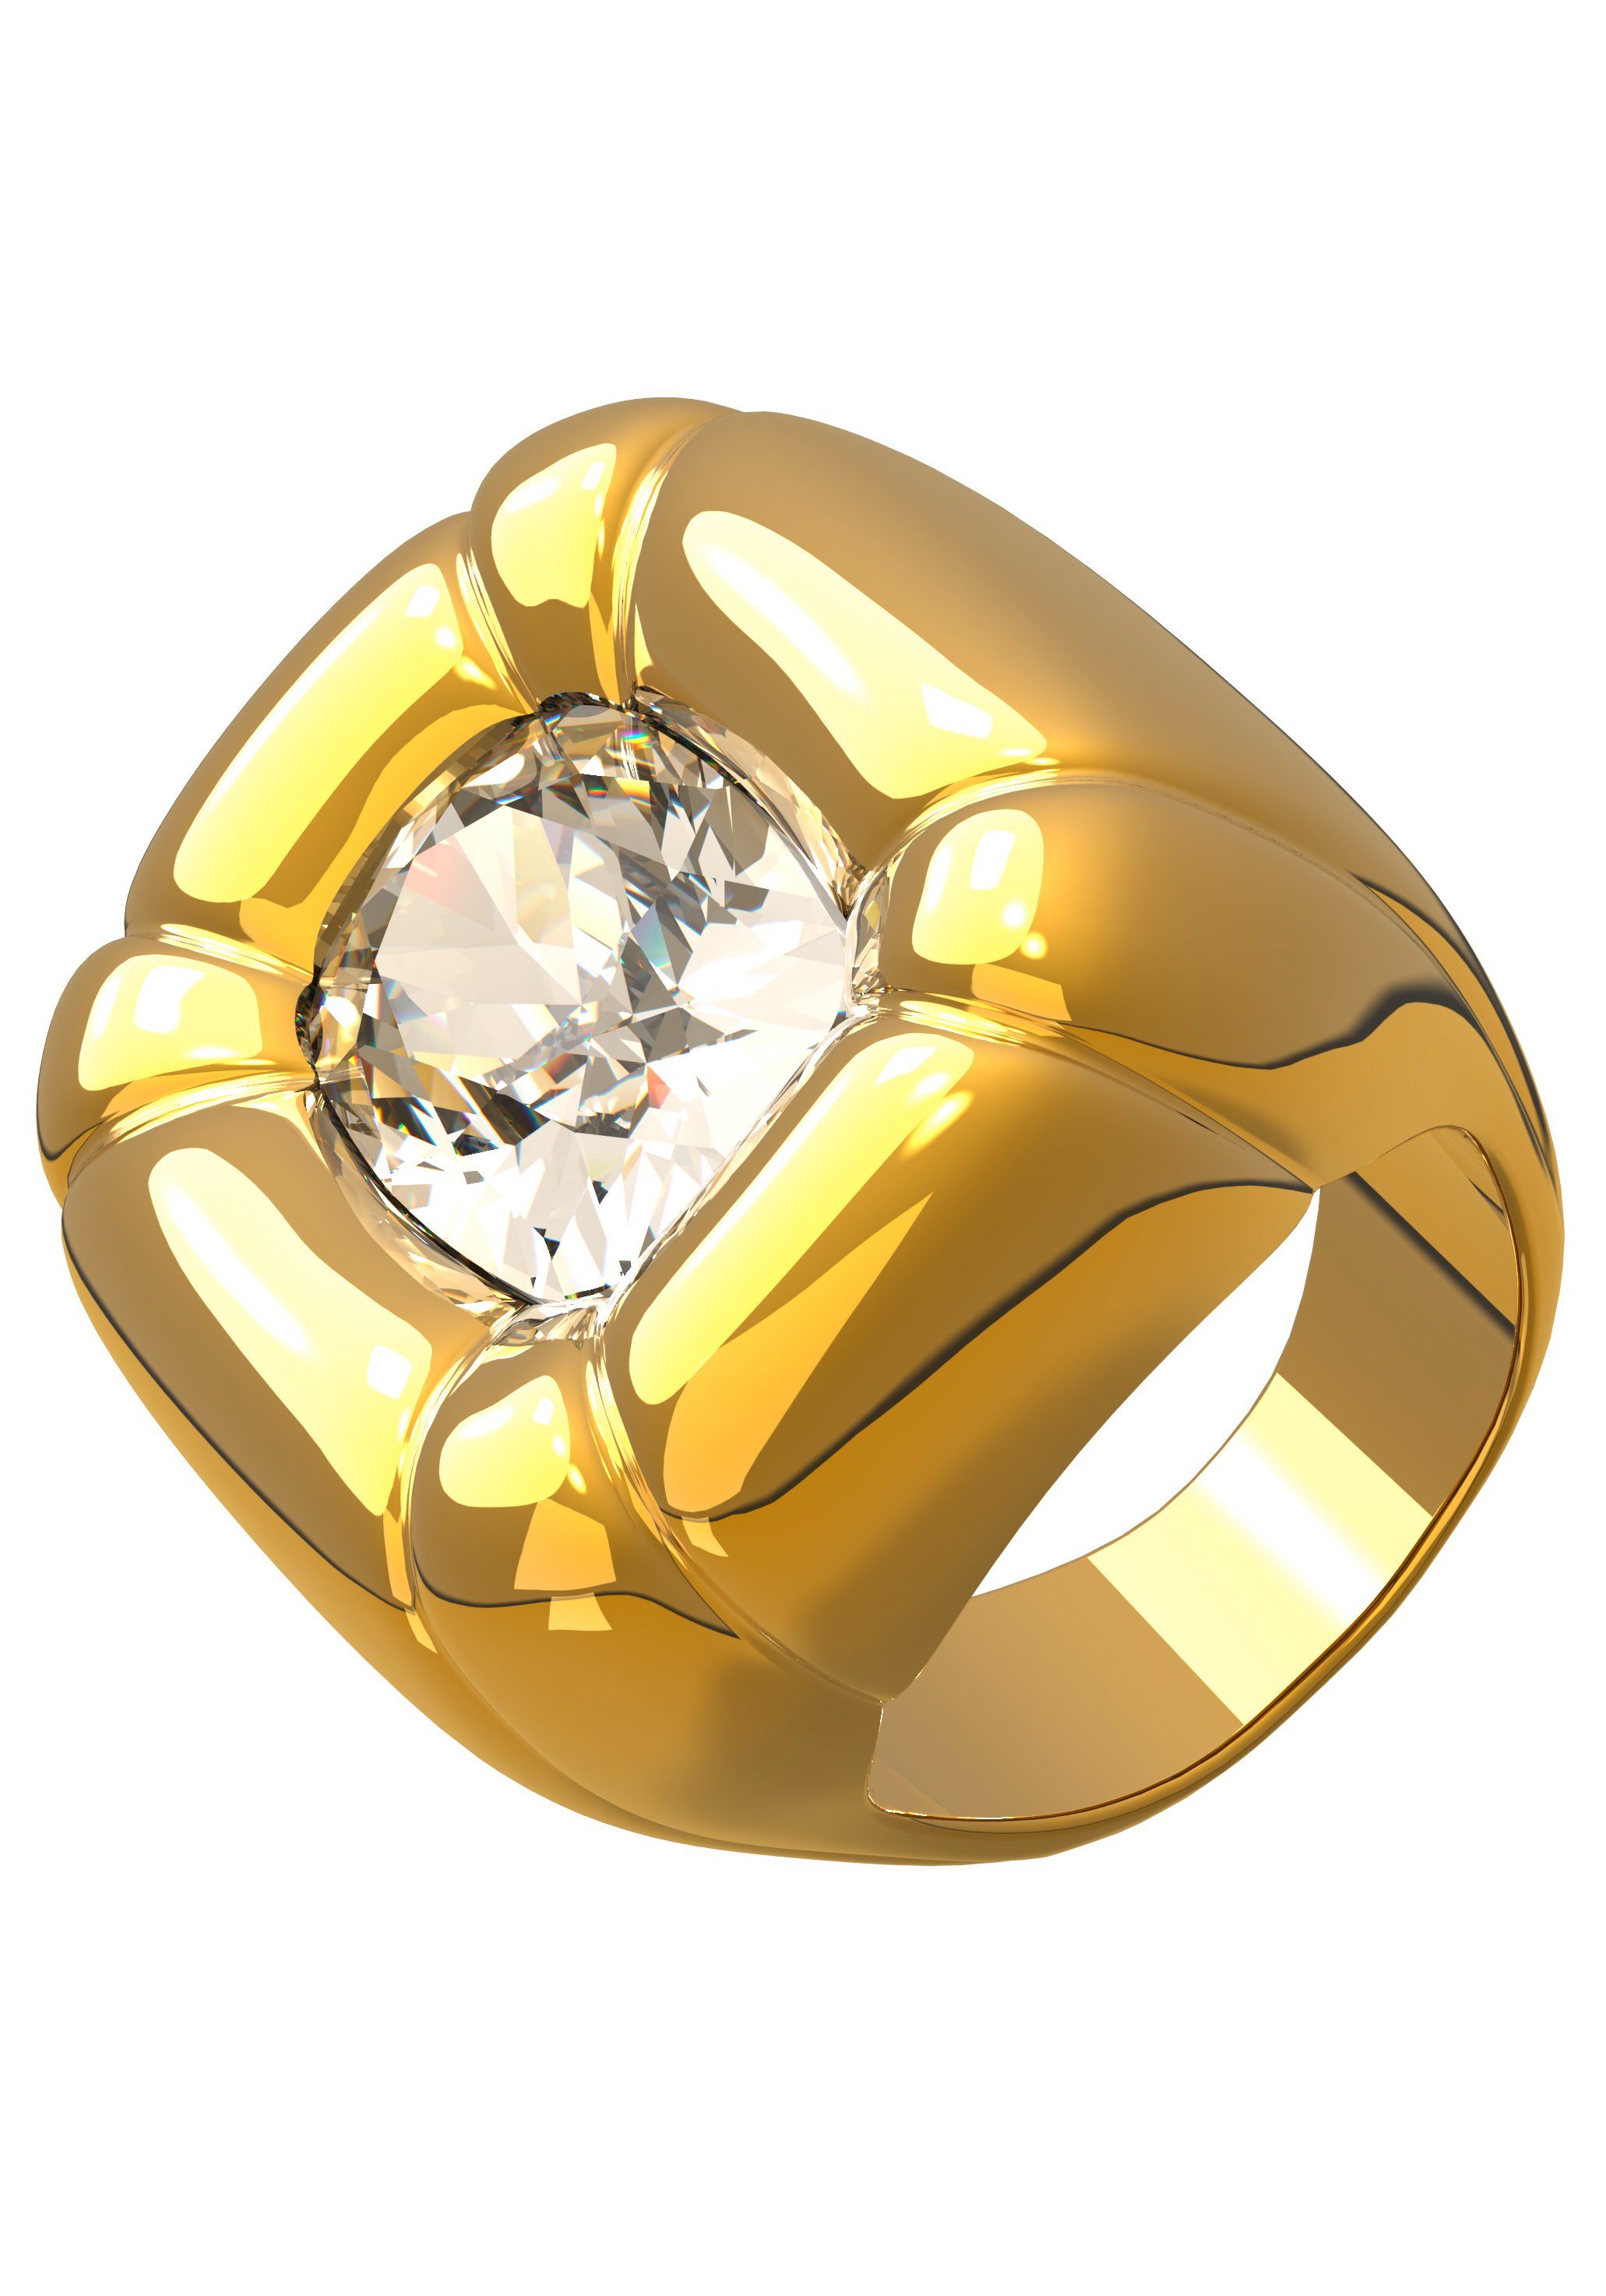 Fingerring mit Dulcis Cocktail Kristall Ring, 5624371, Cushion-Schliff, 5624369, Swarovski® Swarovski